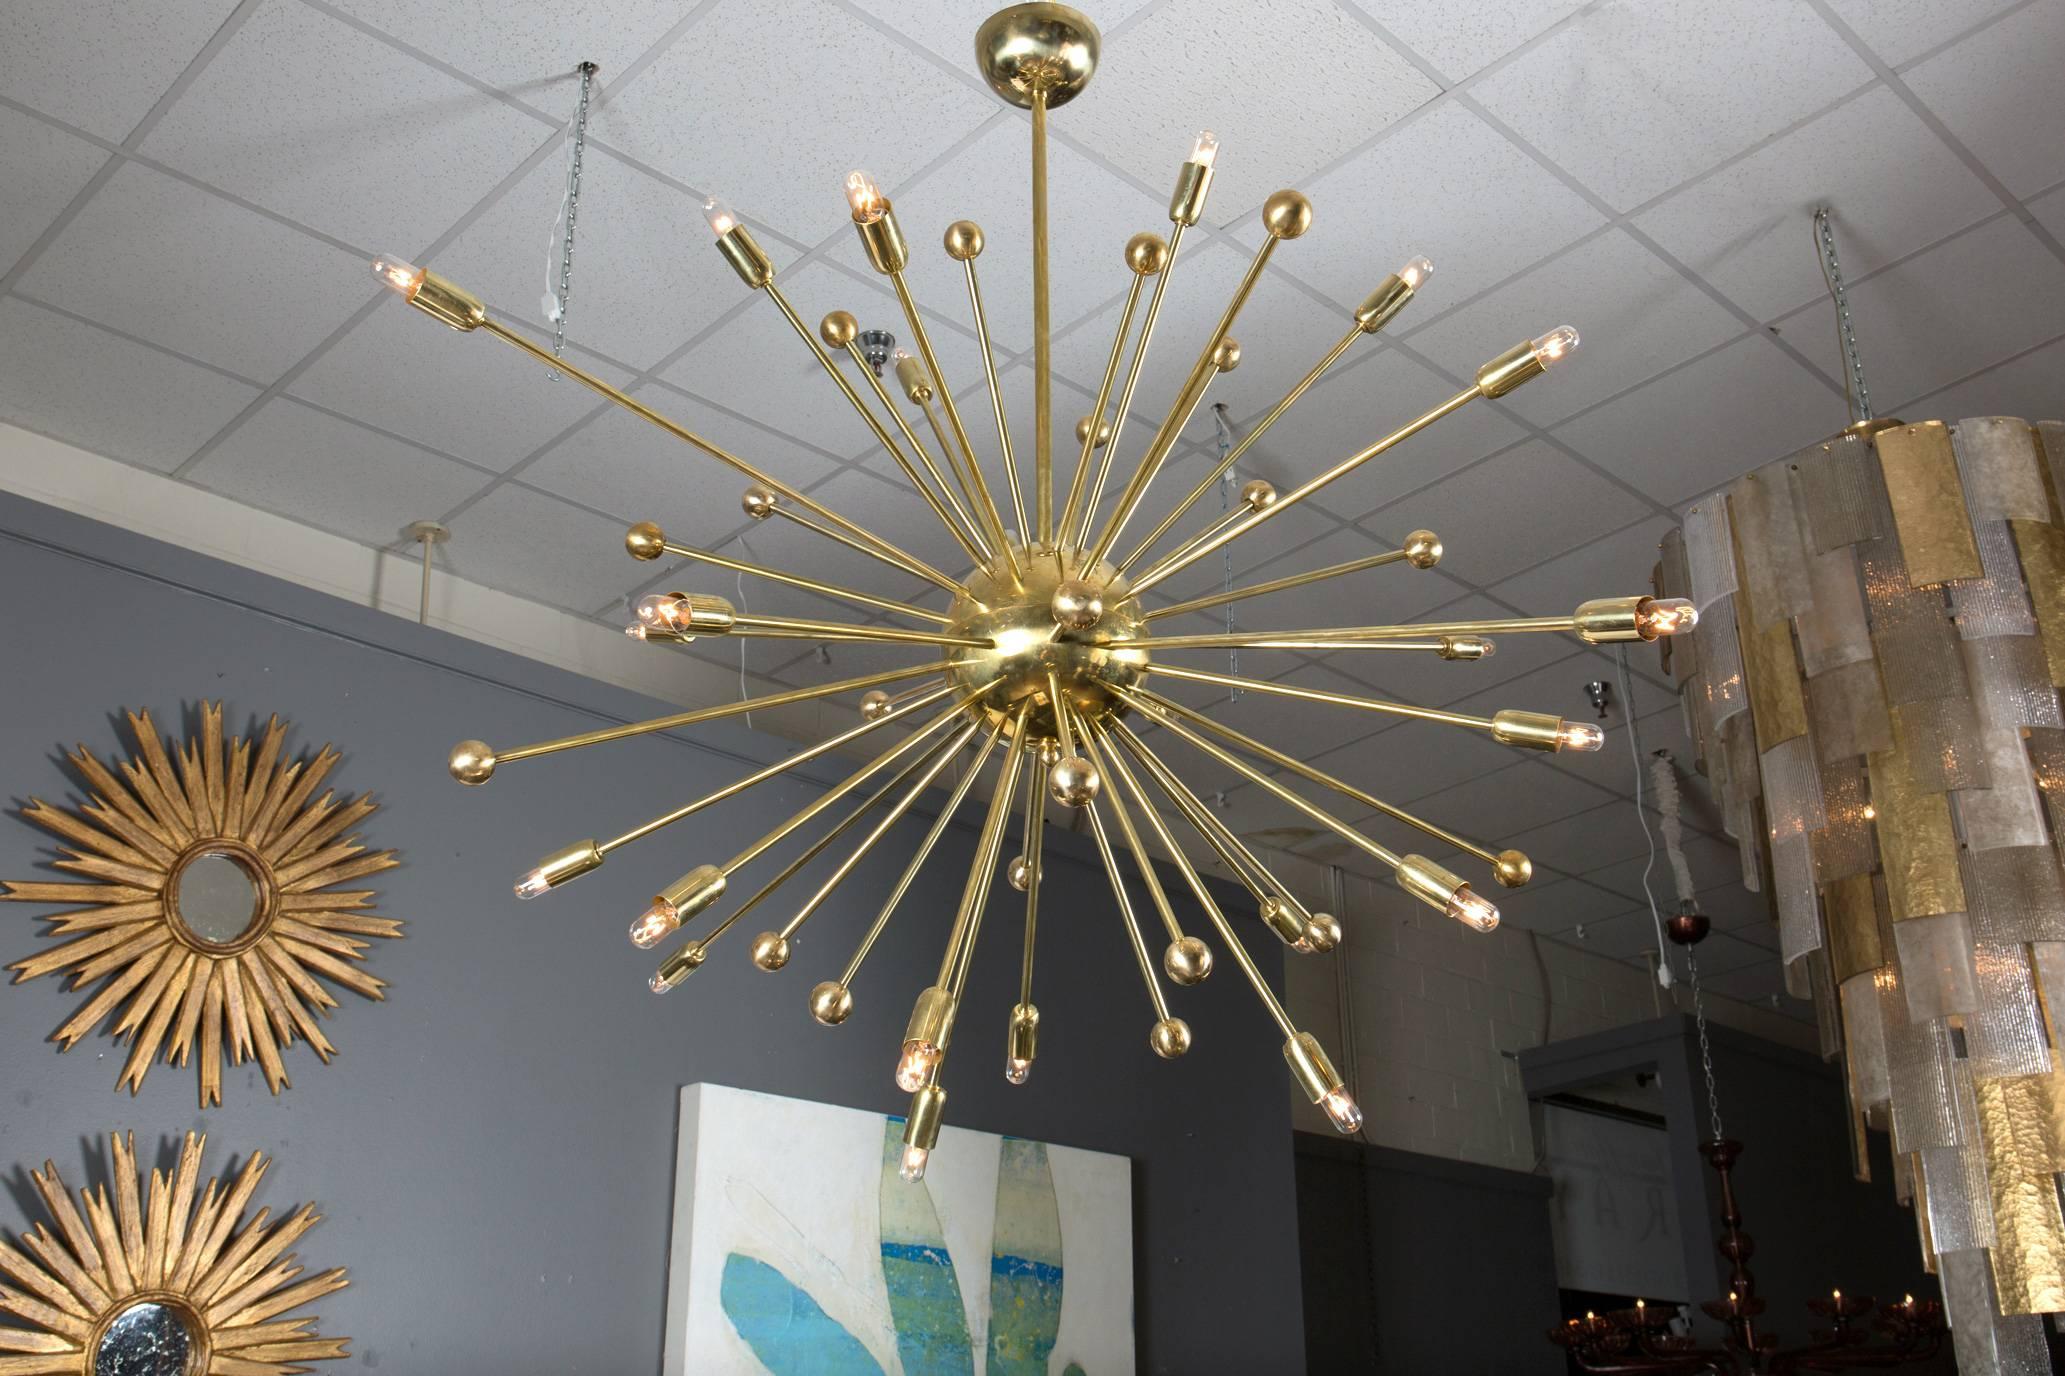 Vintage Italian Midcentury Modern style "Sputnik" chandelier in brass.
Holds 22 candelabra base bulbs, rewired for the US.